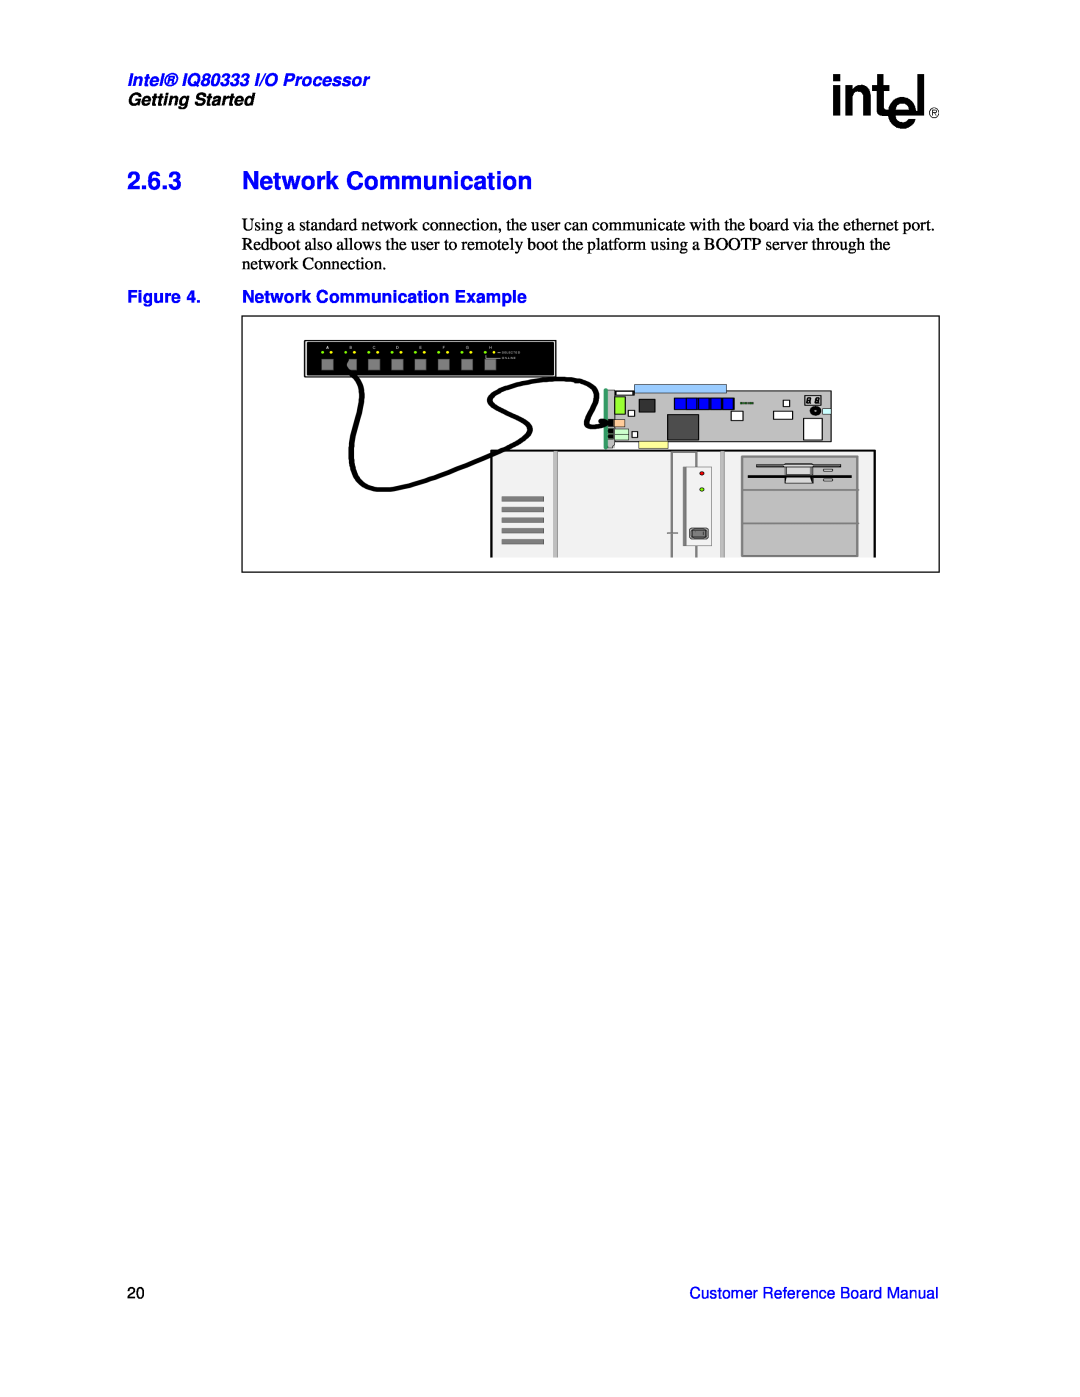 Intel manual 2.6.3Network Communication, Network Communication Example, Intel IQ80333 I/O Processor, Getting Started 